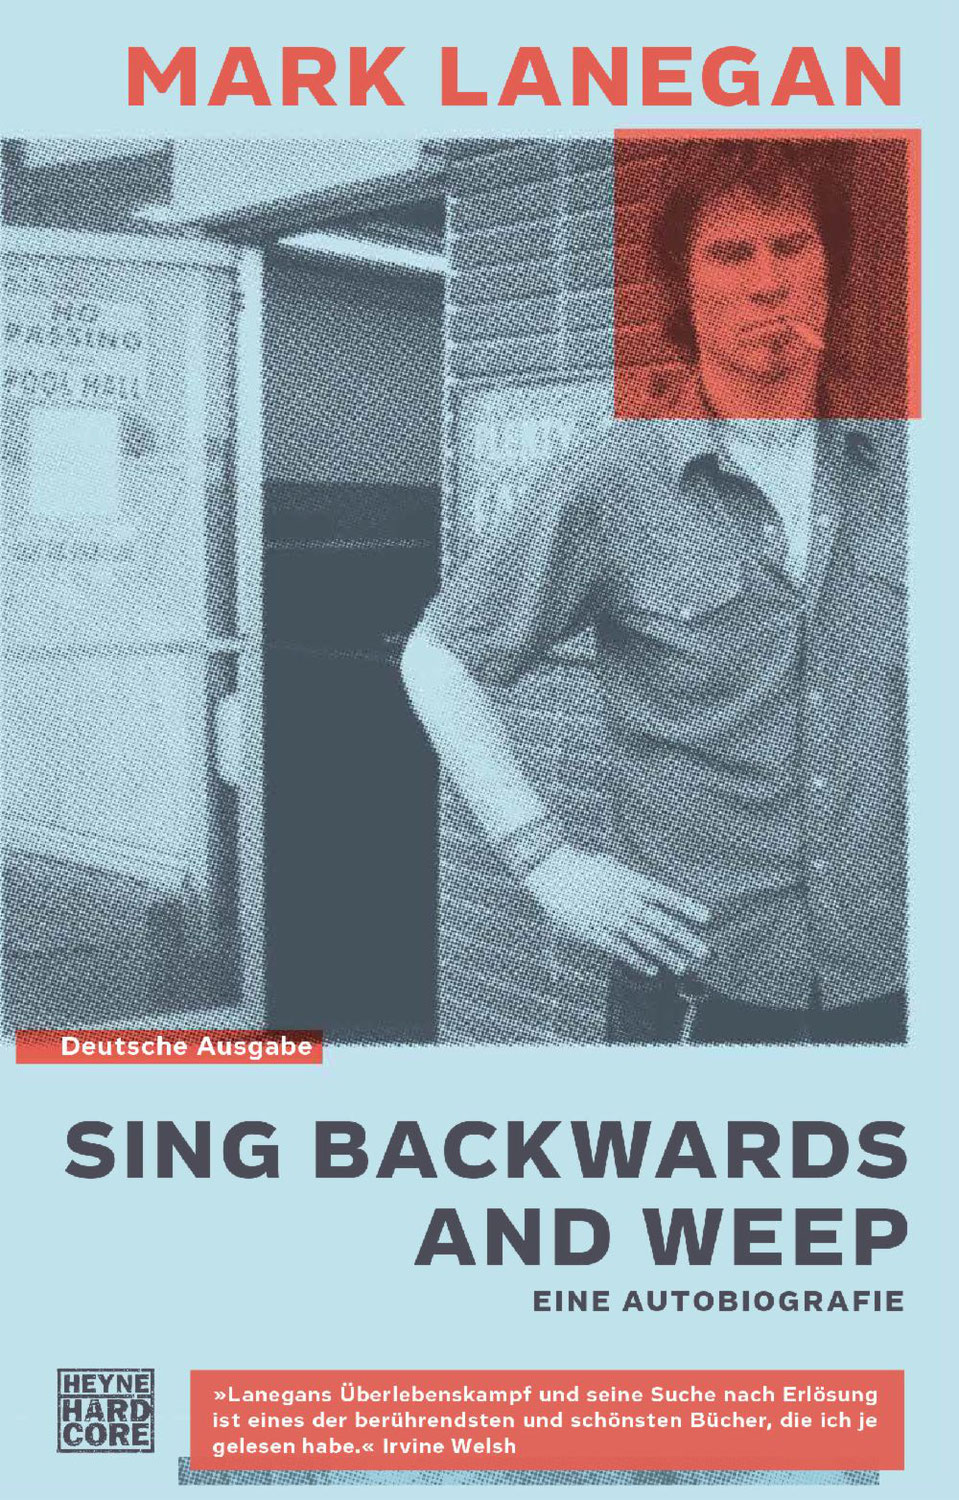 Sing backwards and weep von Mark Lanegan ☆☆☆☆☆